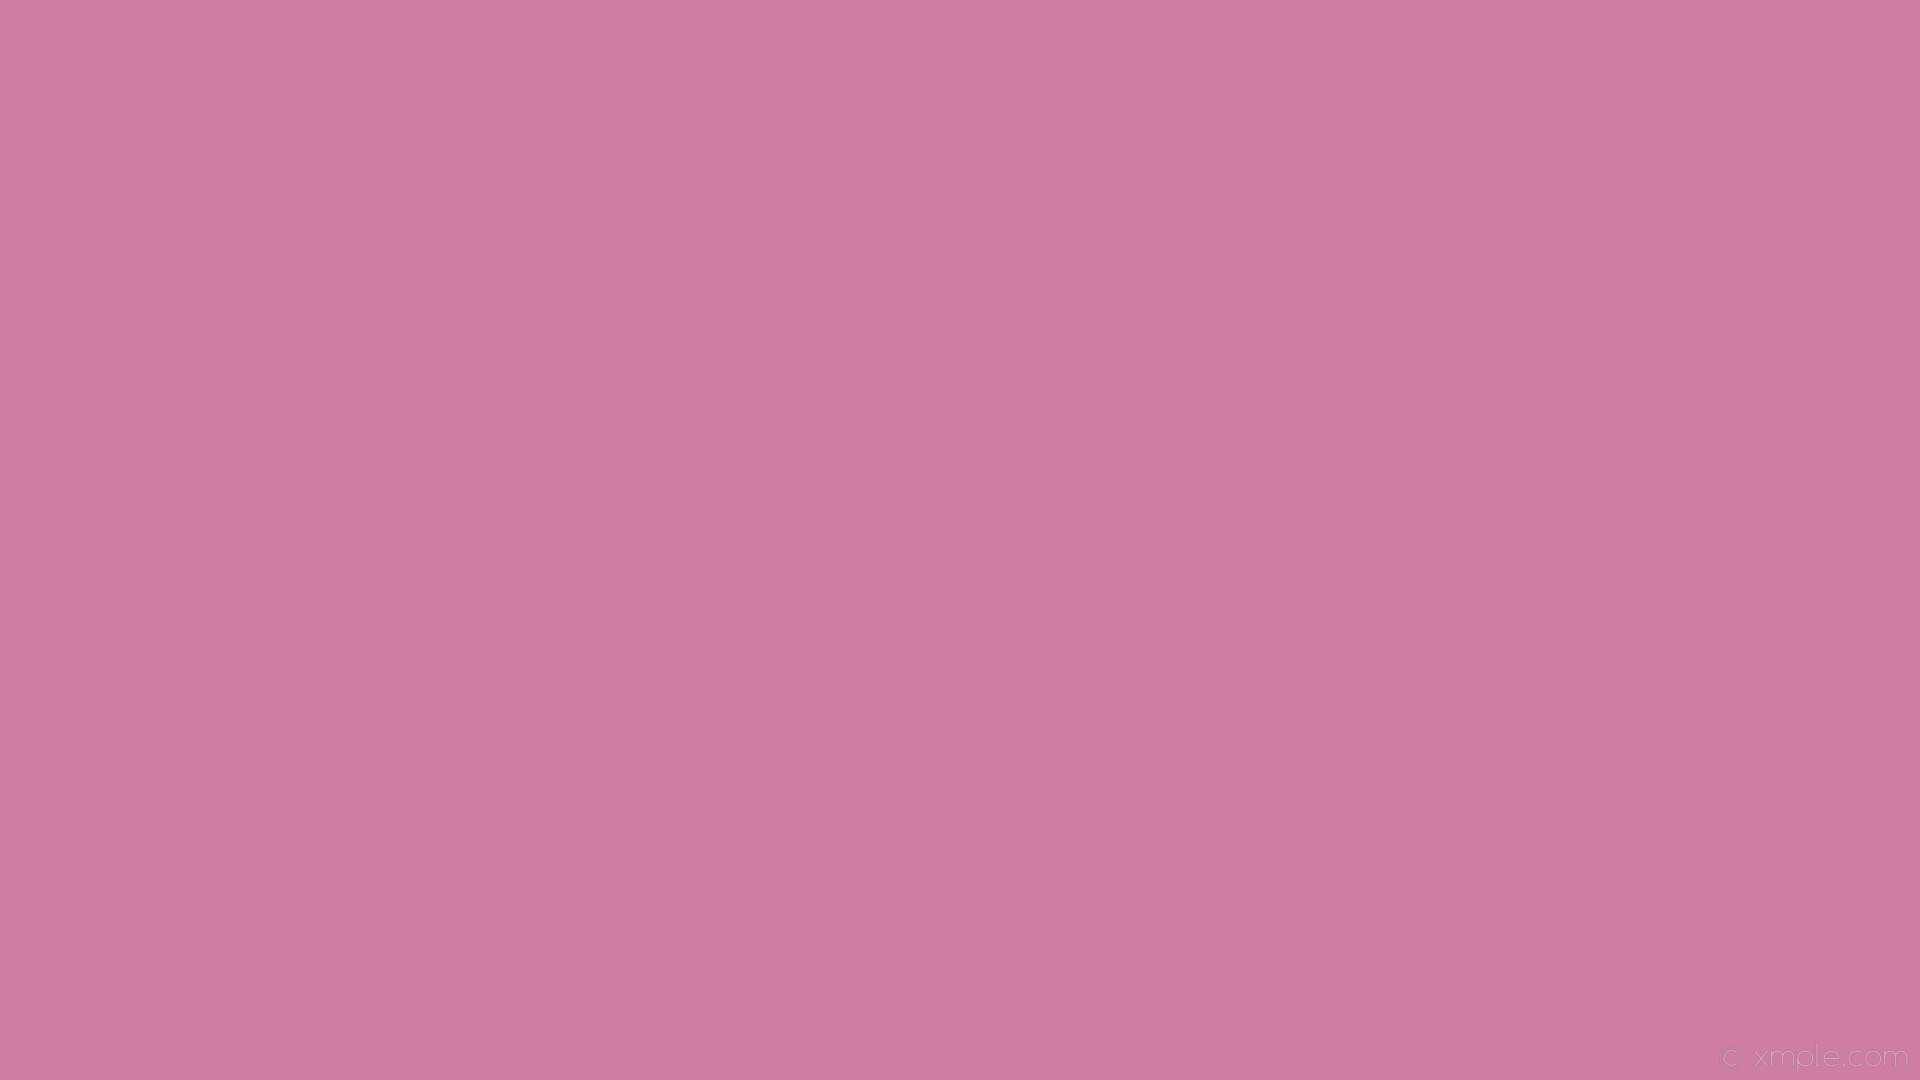 1920x1080 wallpaper pink solid color plain one colour single #cf7da0